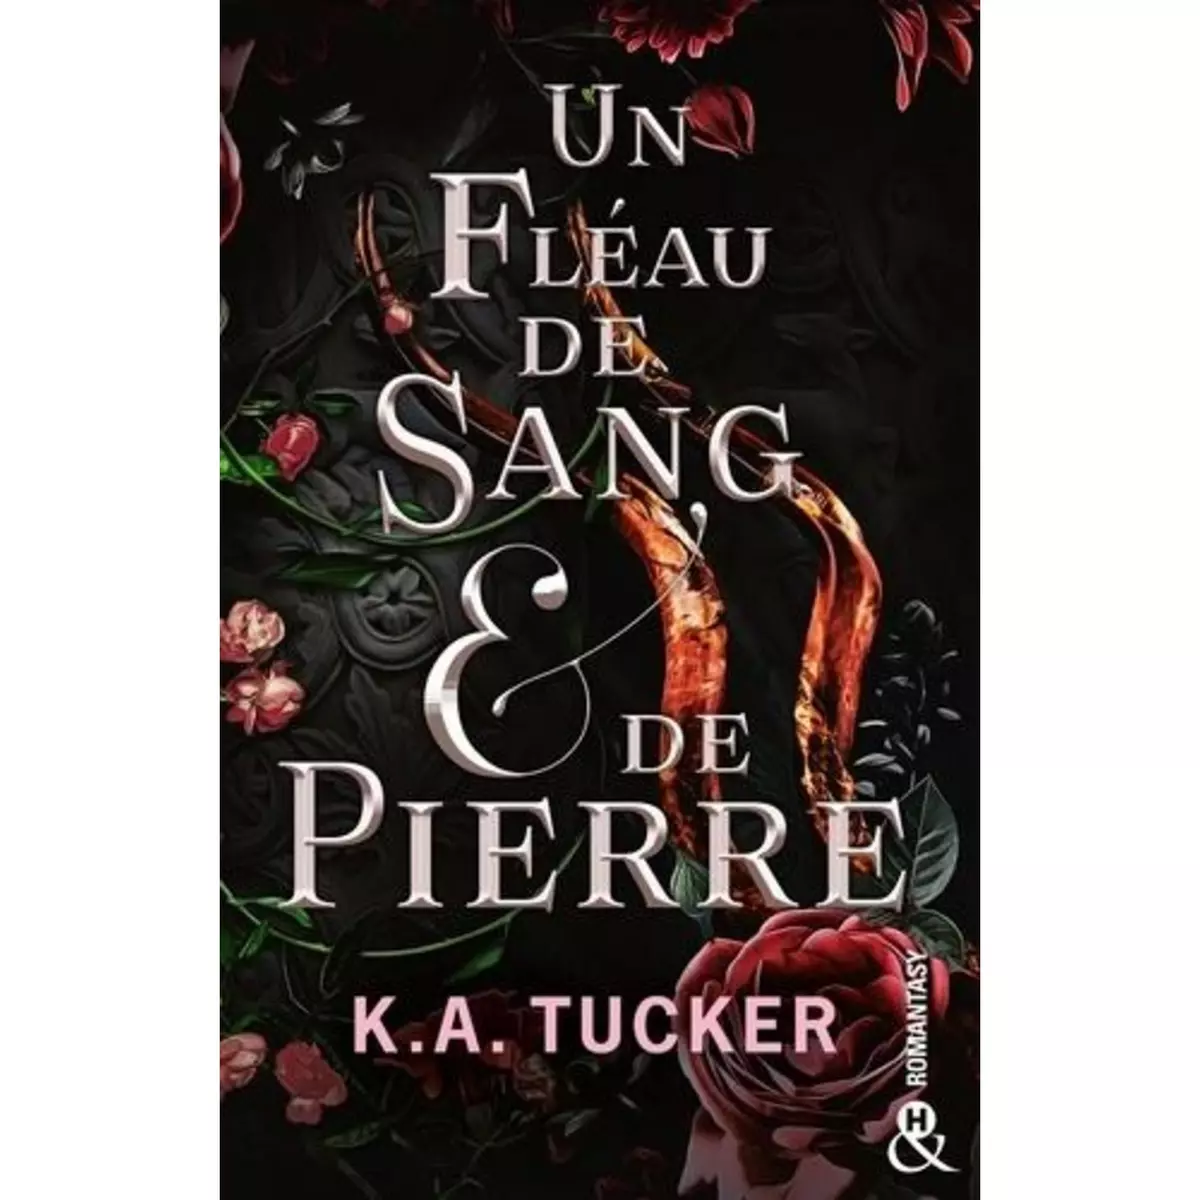  UN FLEAU DE SANG & DE PIERRE, Tucker K. A.